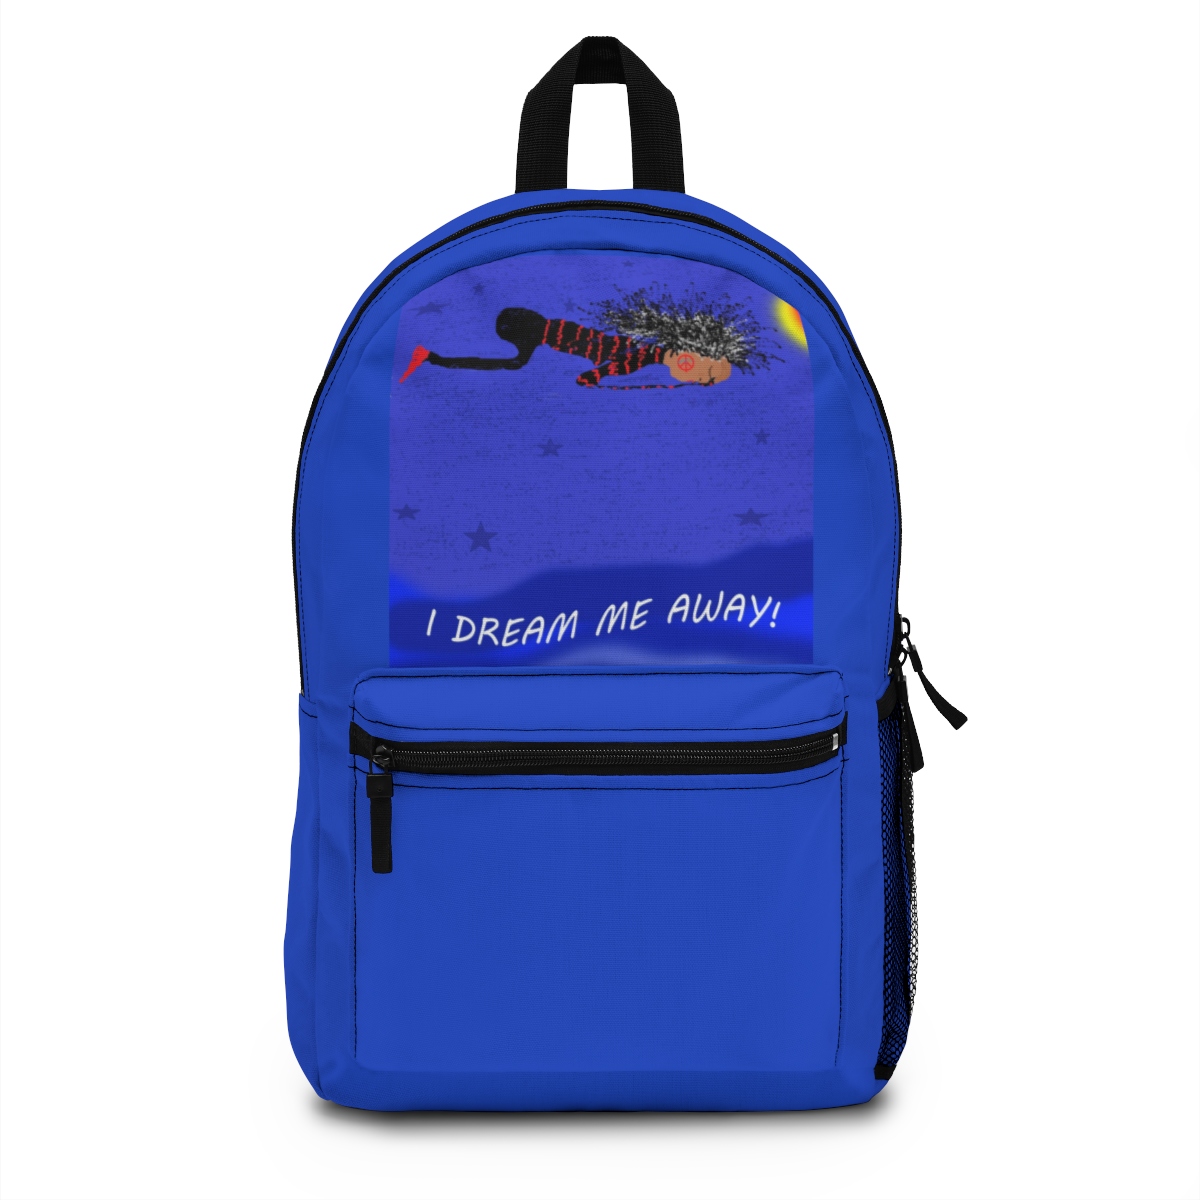 I DREAM ME AWAY Backpack (Made in USA) - Aringa Creations